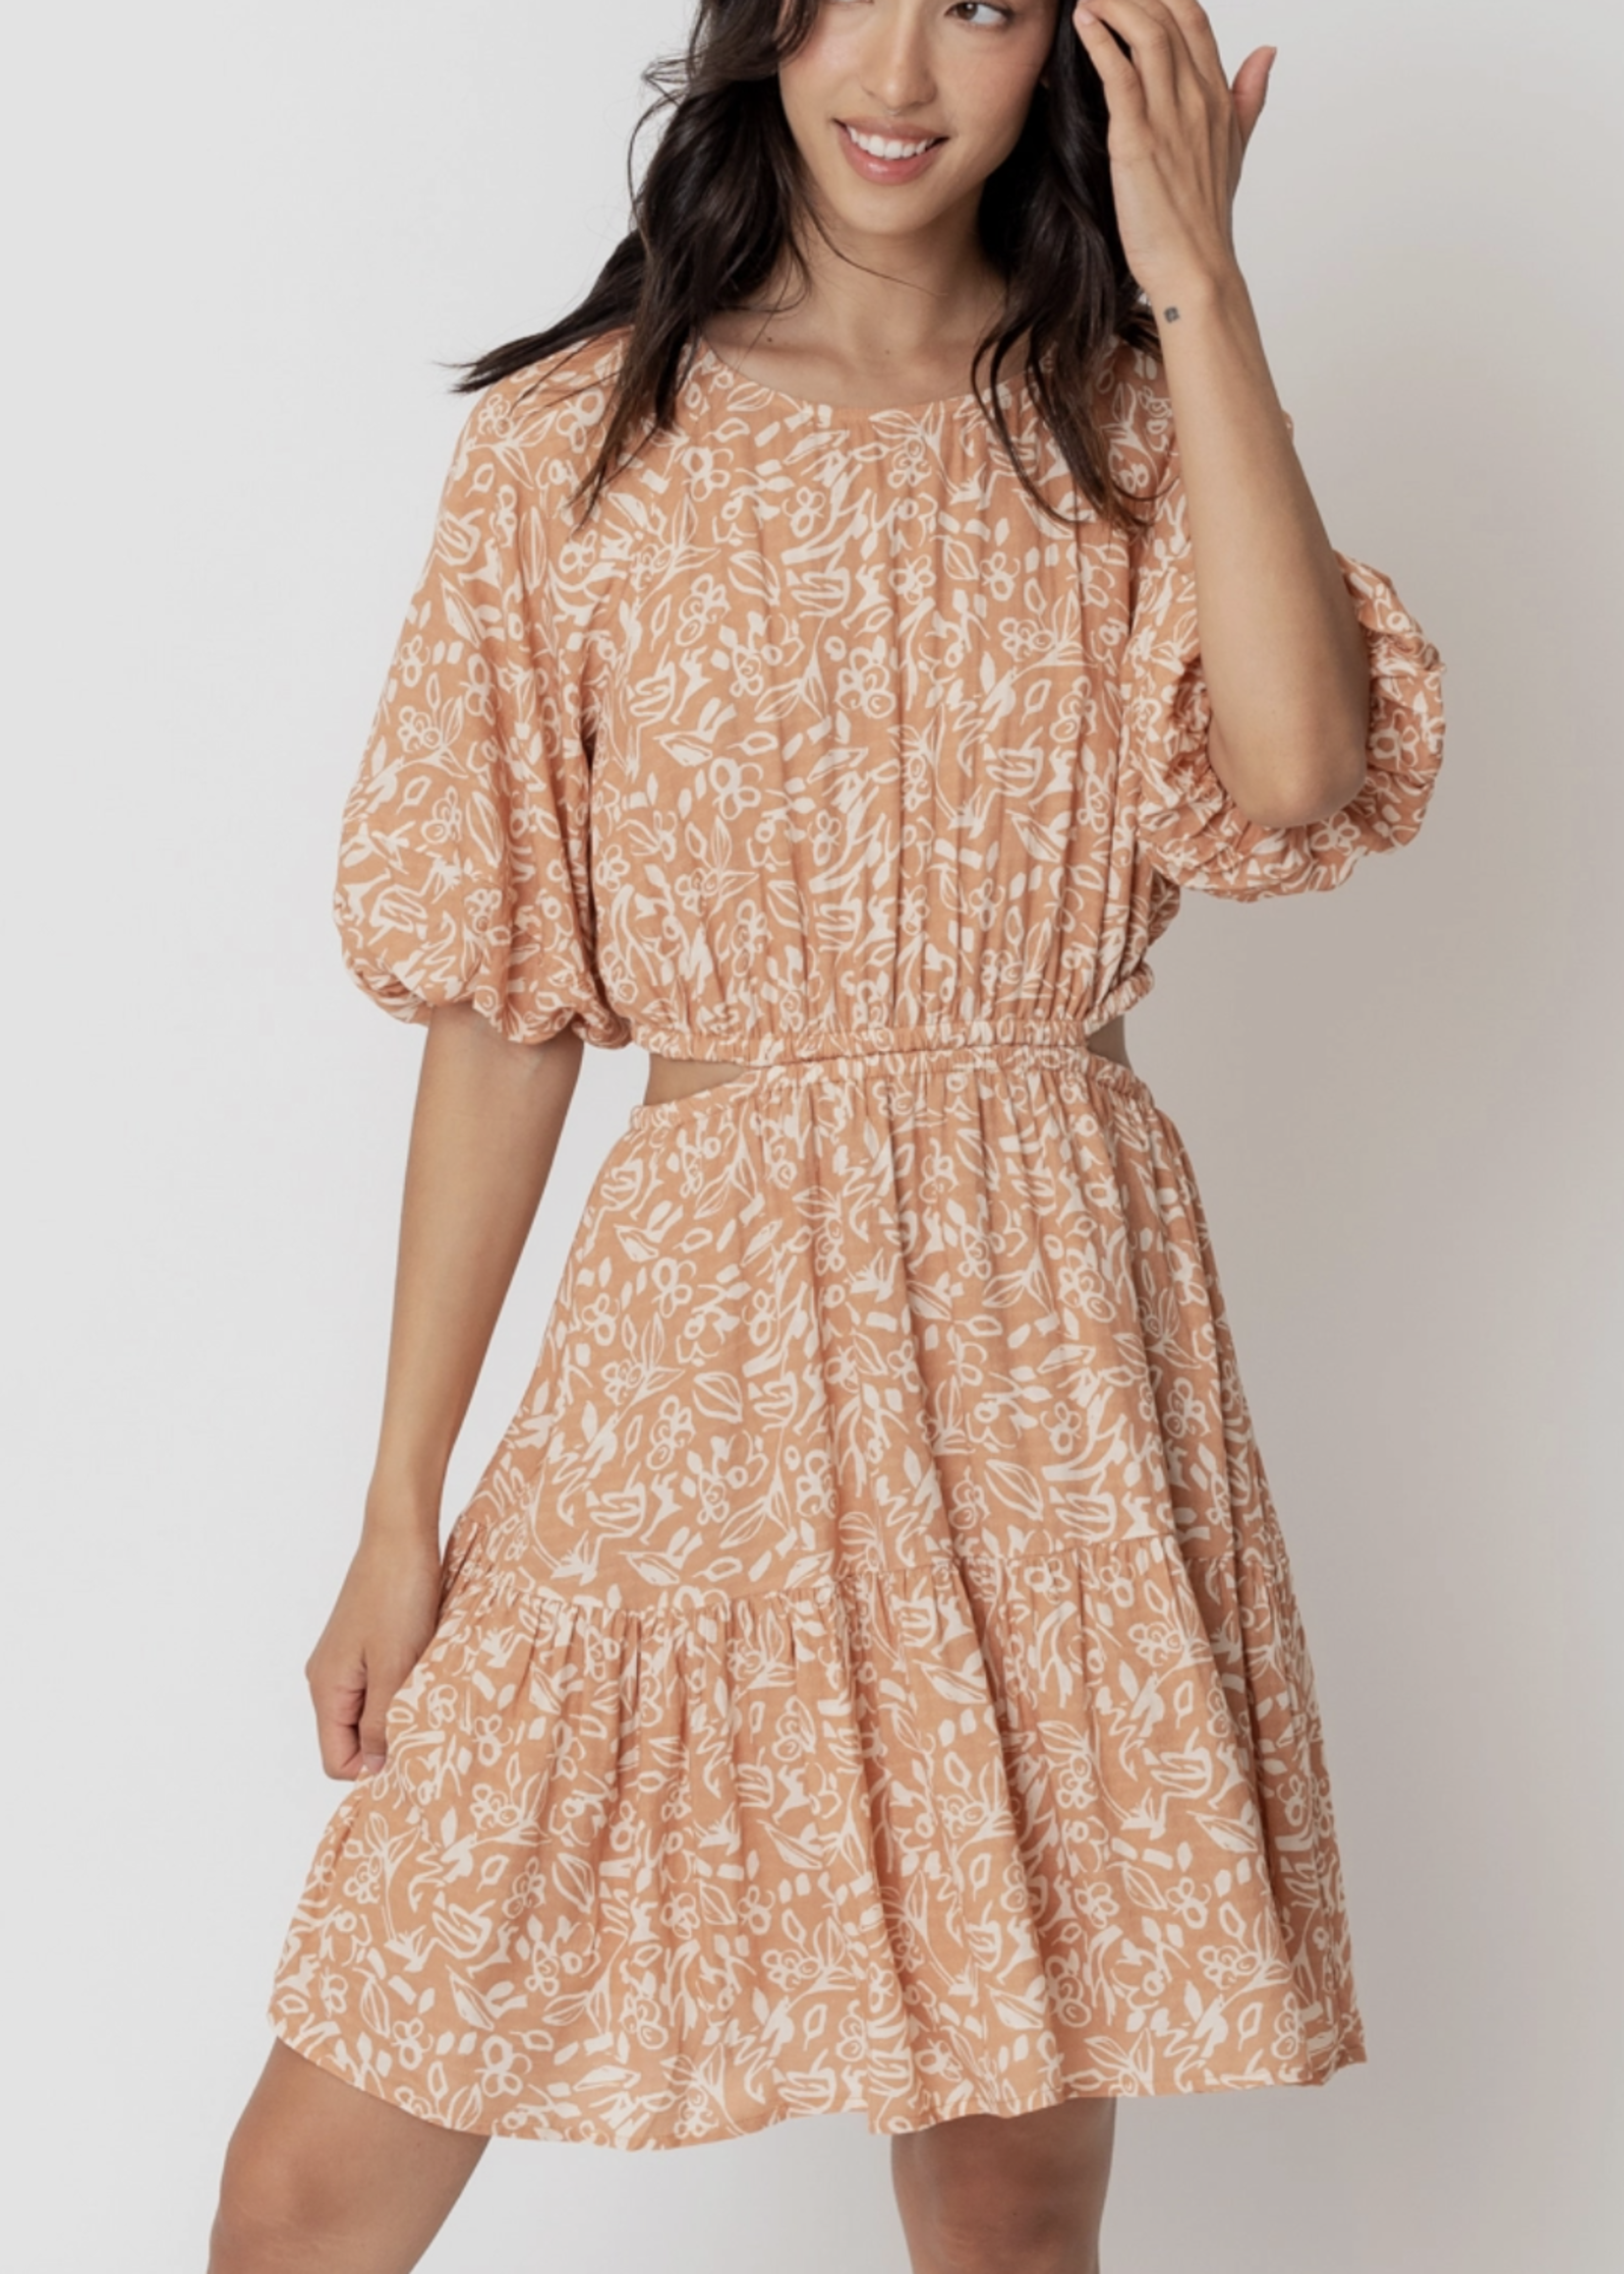 ENCR Paige Cutout Dress | Peach